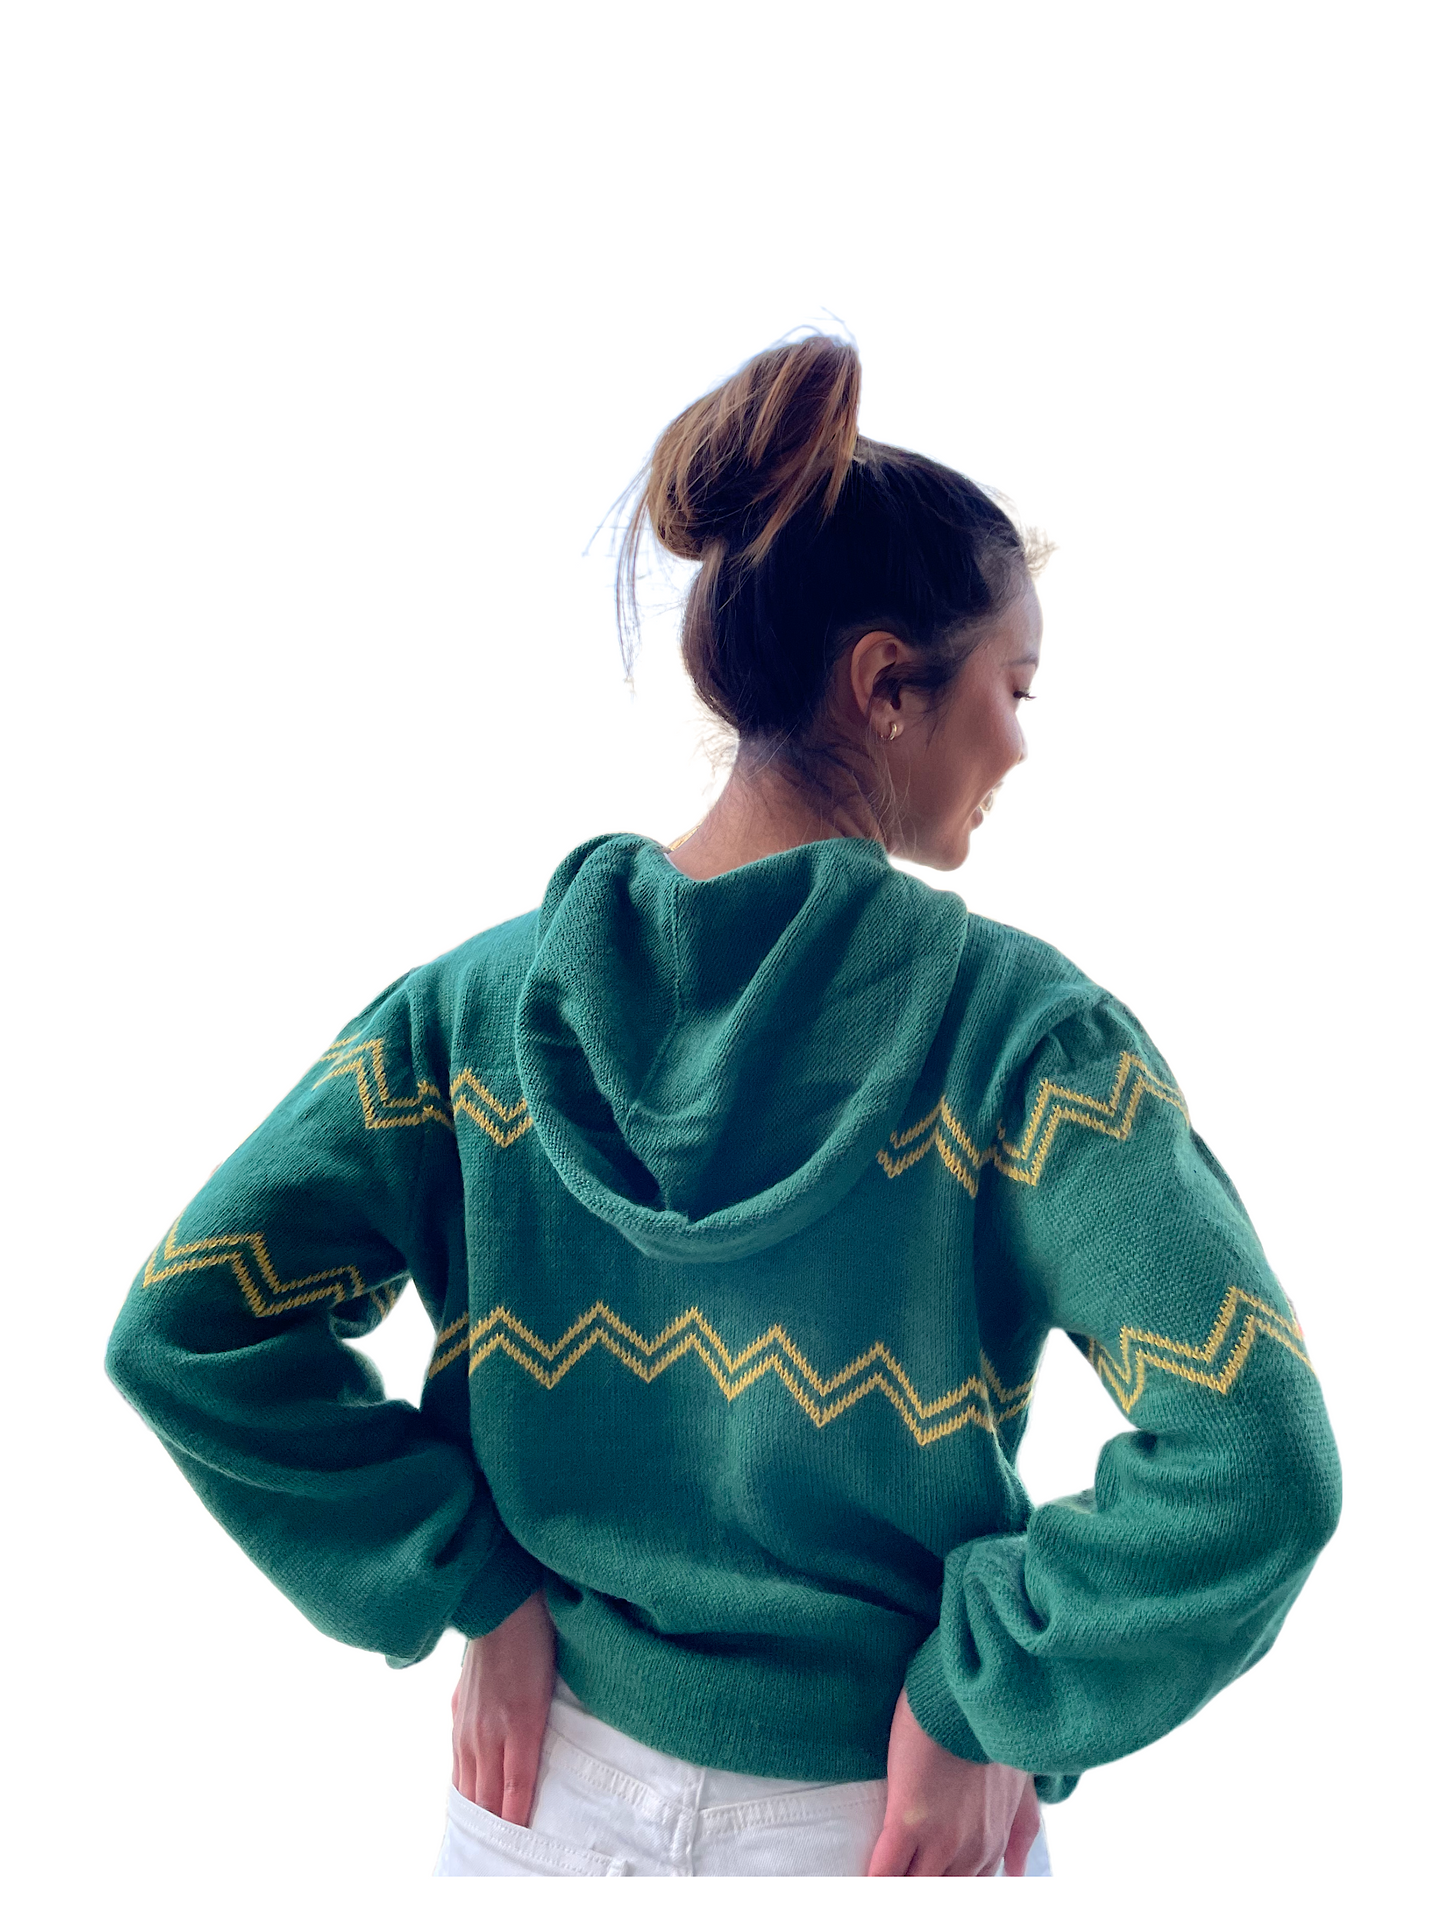 Green Bay Hoodie Alpaca Sweater